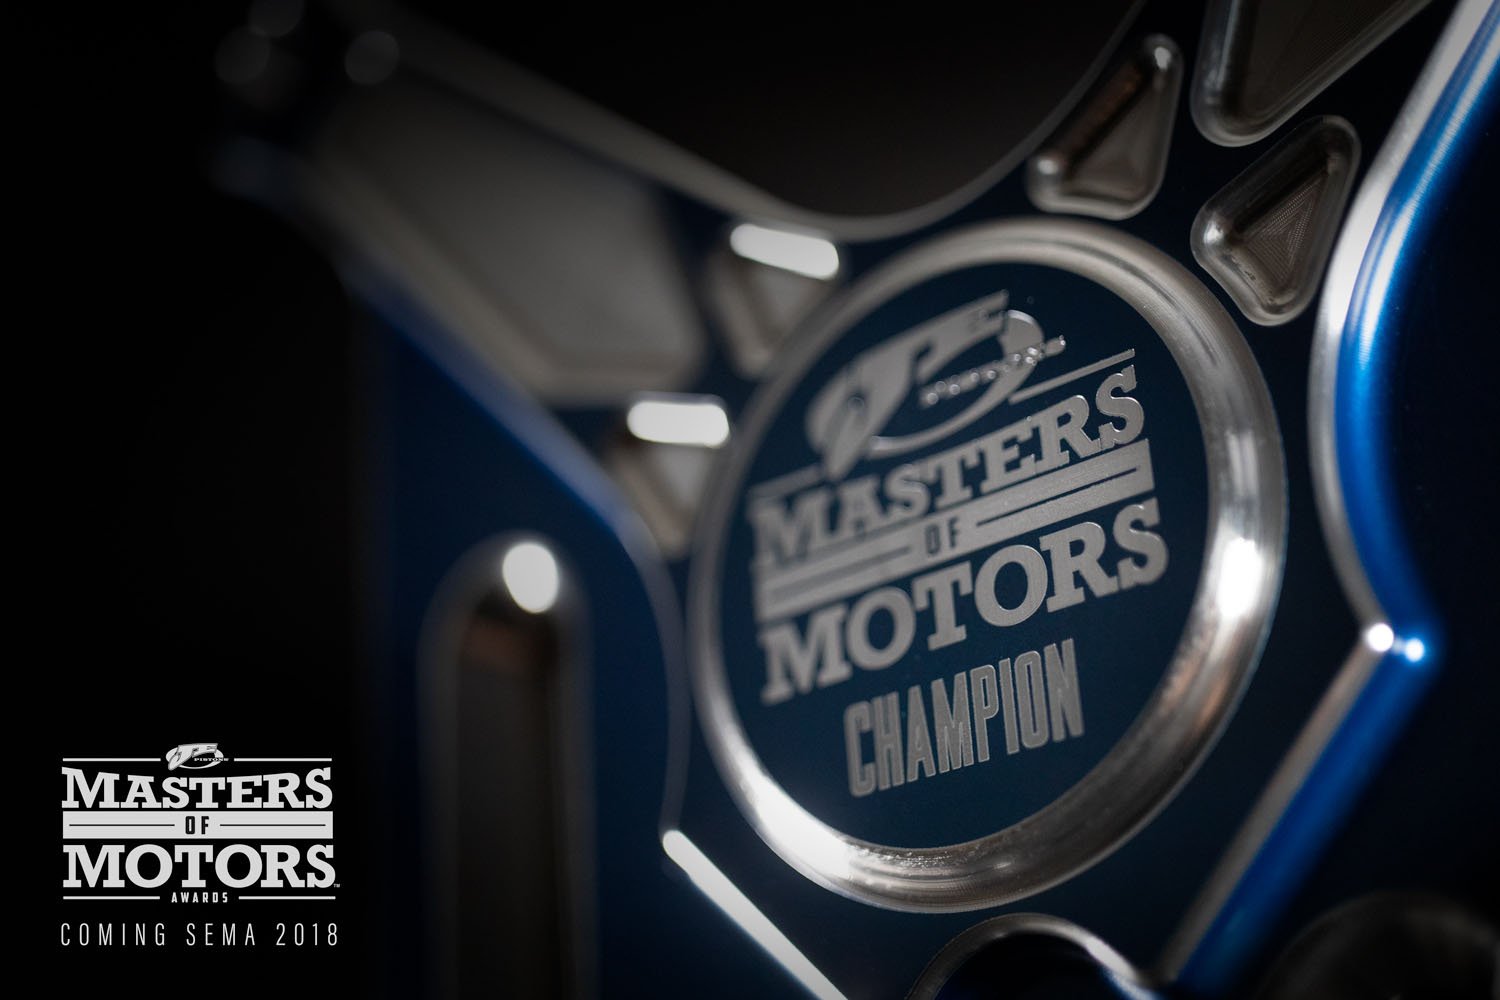 005-masters-of-motors-trophy